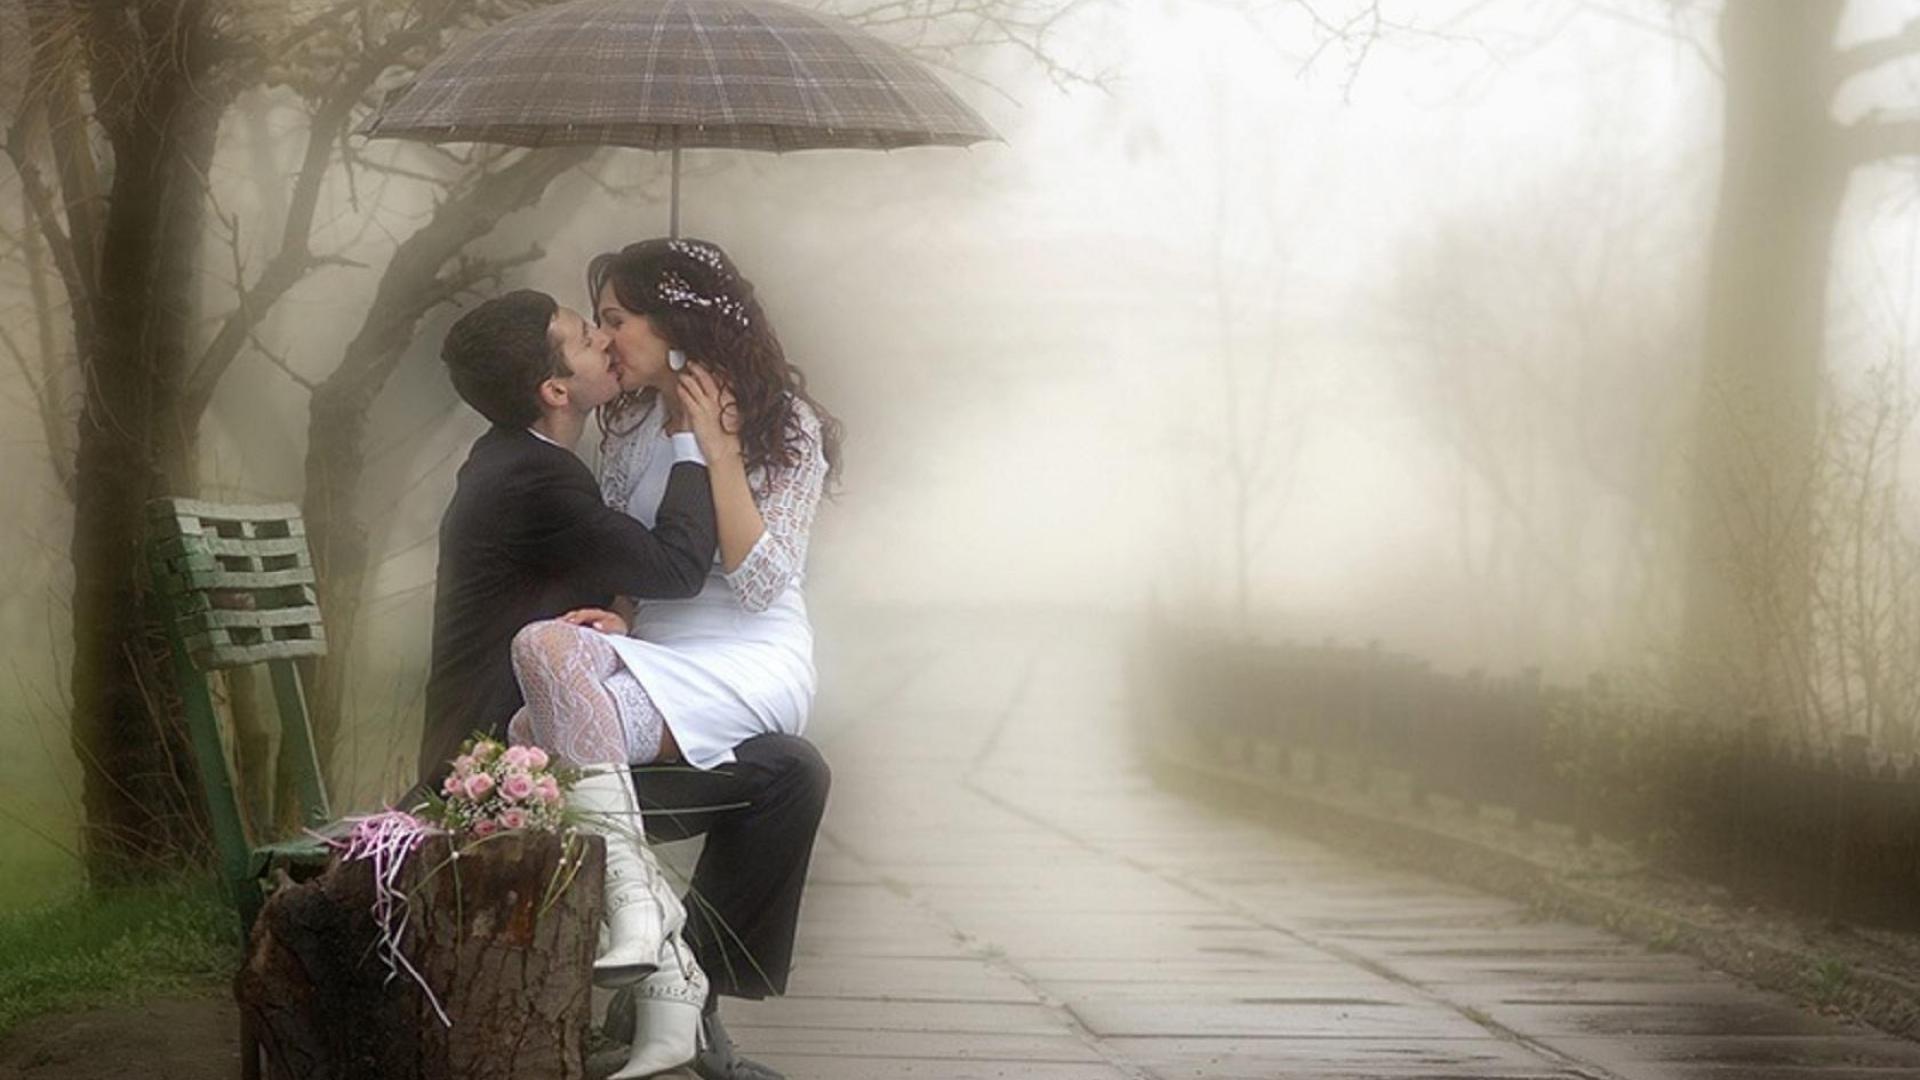 Couple In Rain Wallpaper High Definition High Quality Widescreen